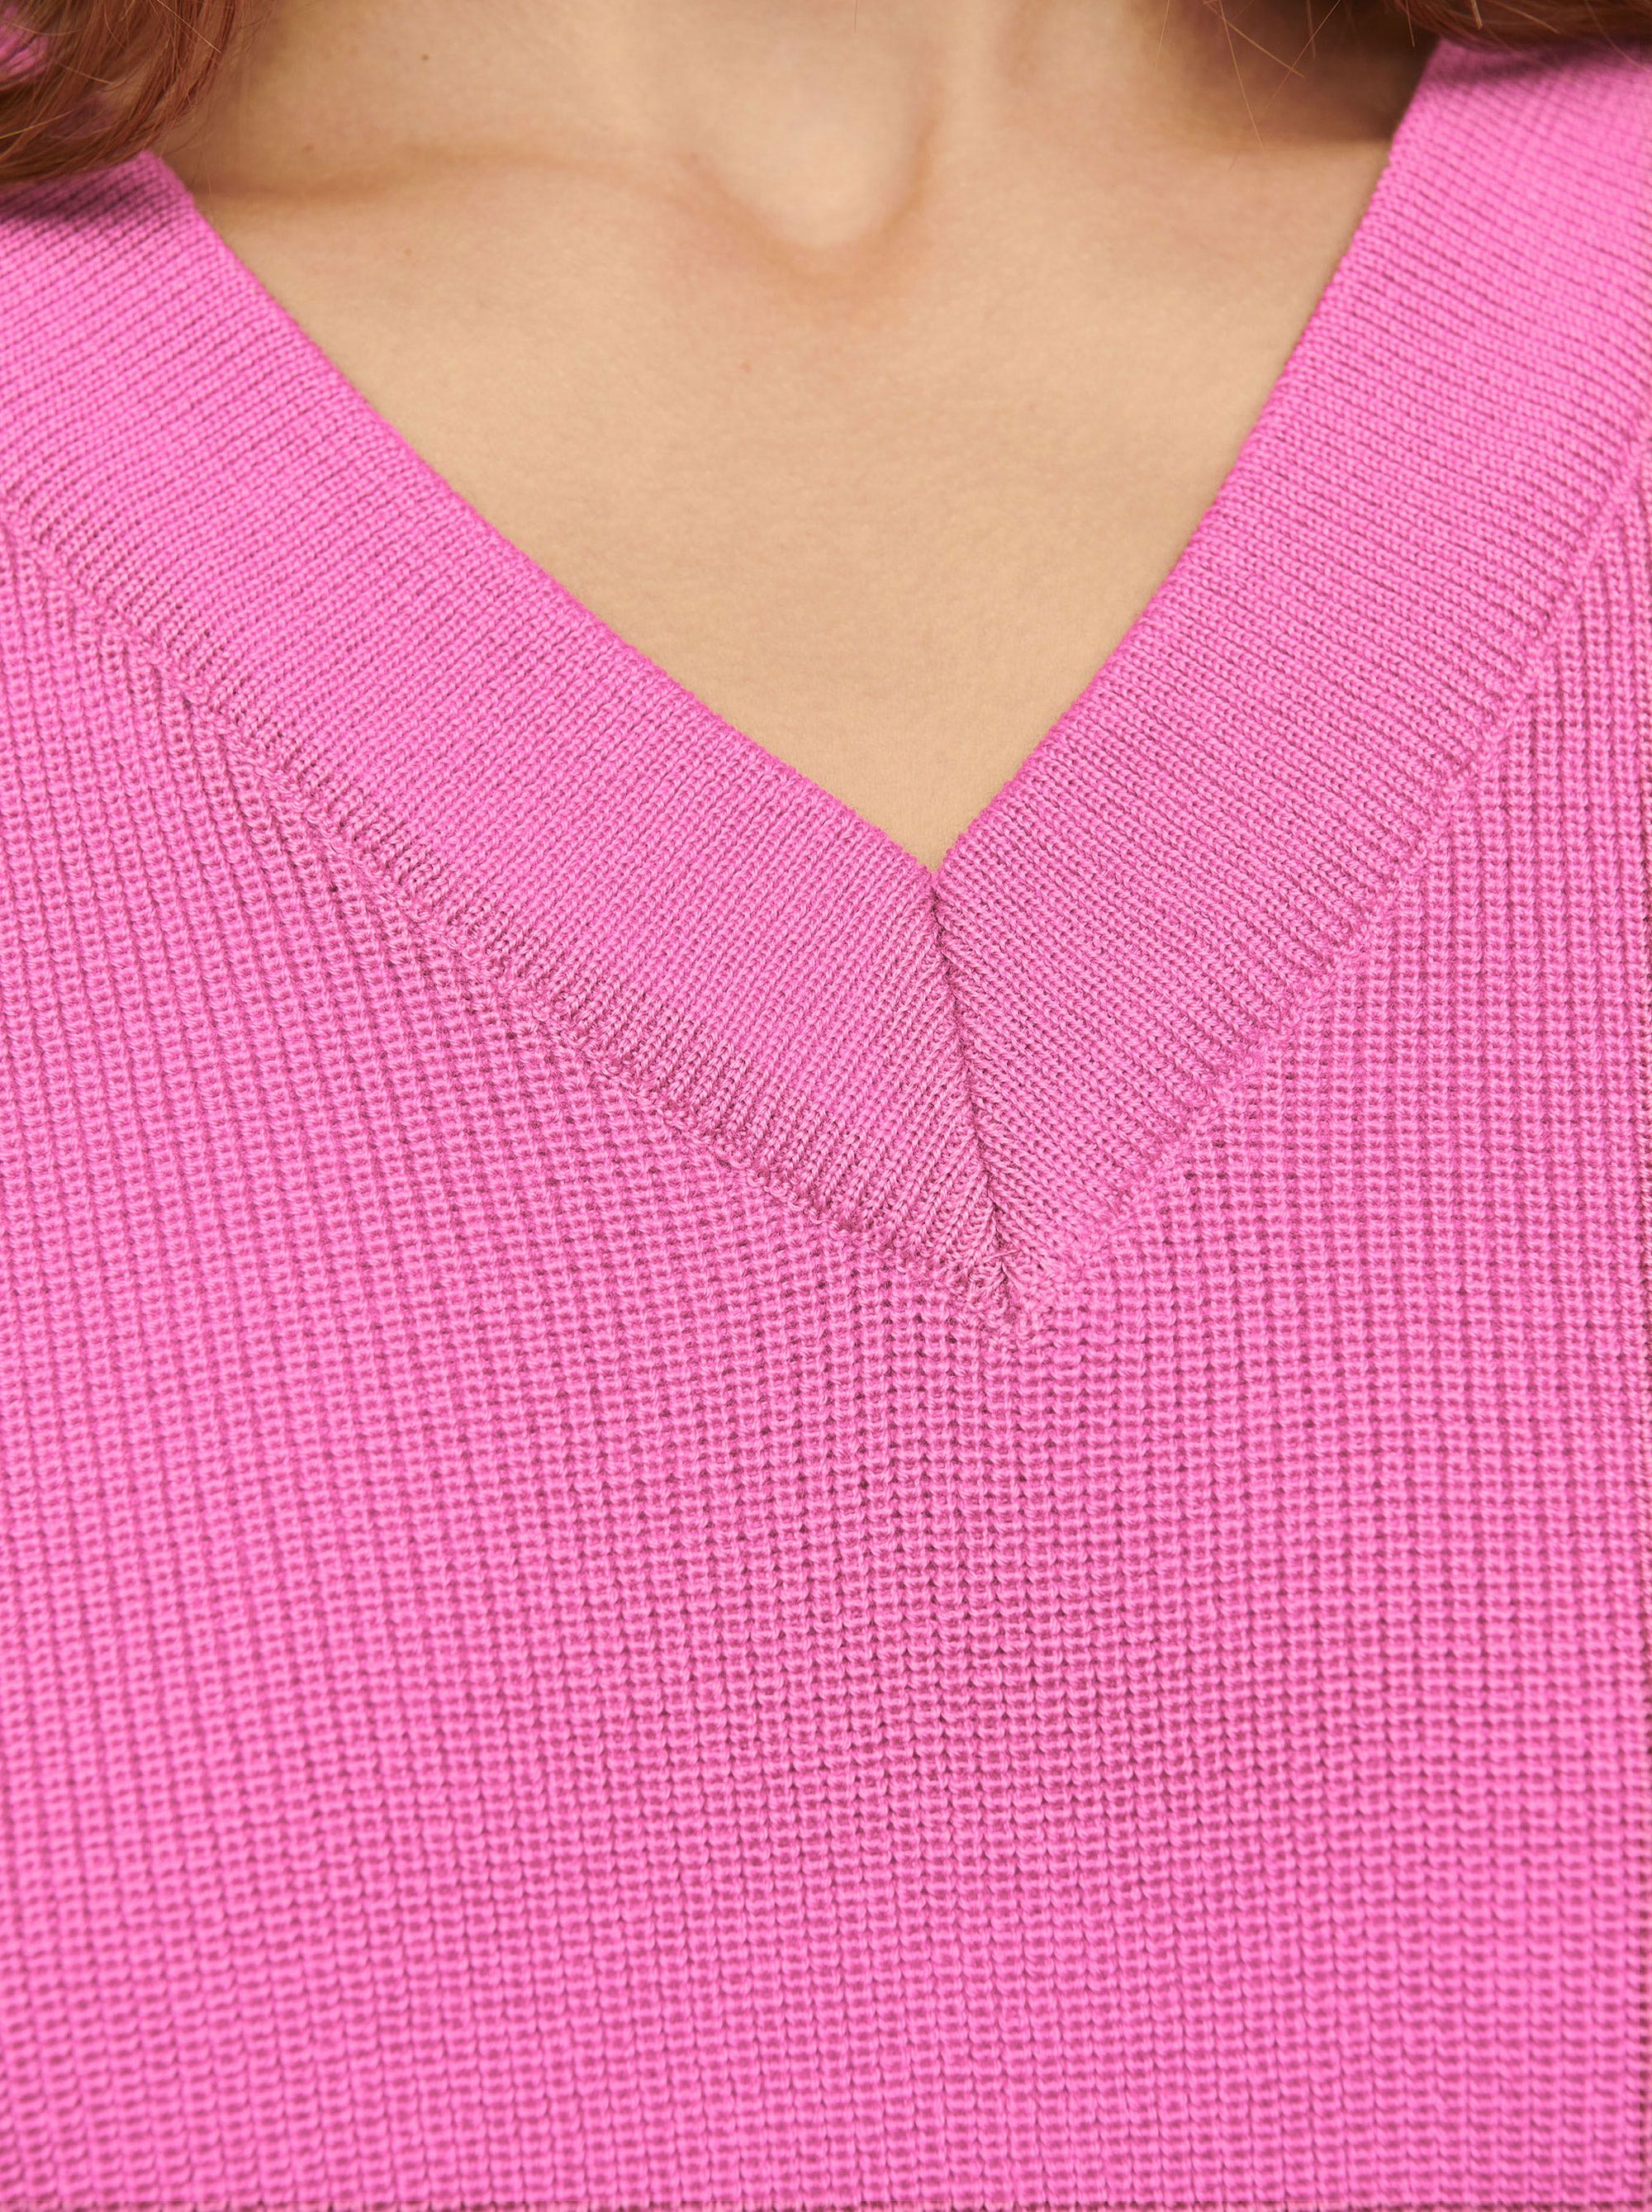 Teym - V-Neck - The Merino Sweater - Women - Bright Pink - 2